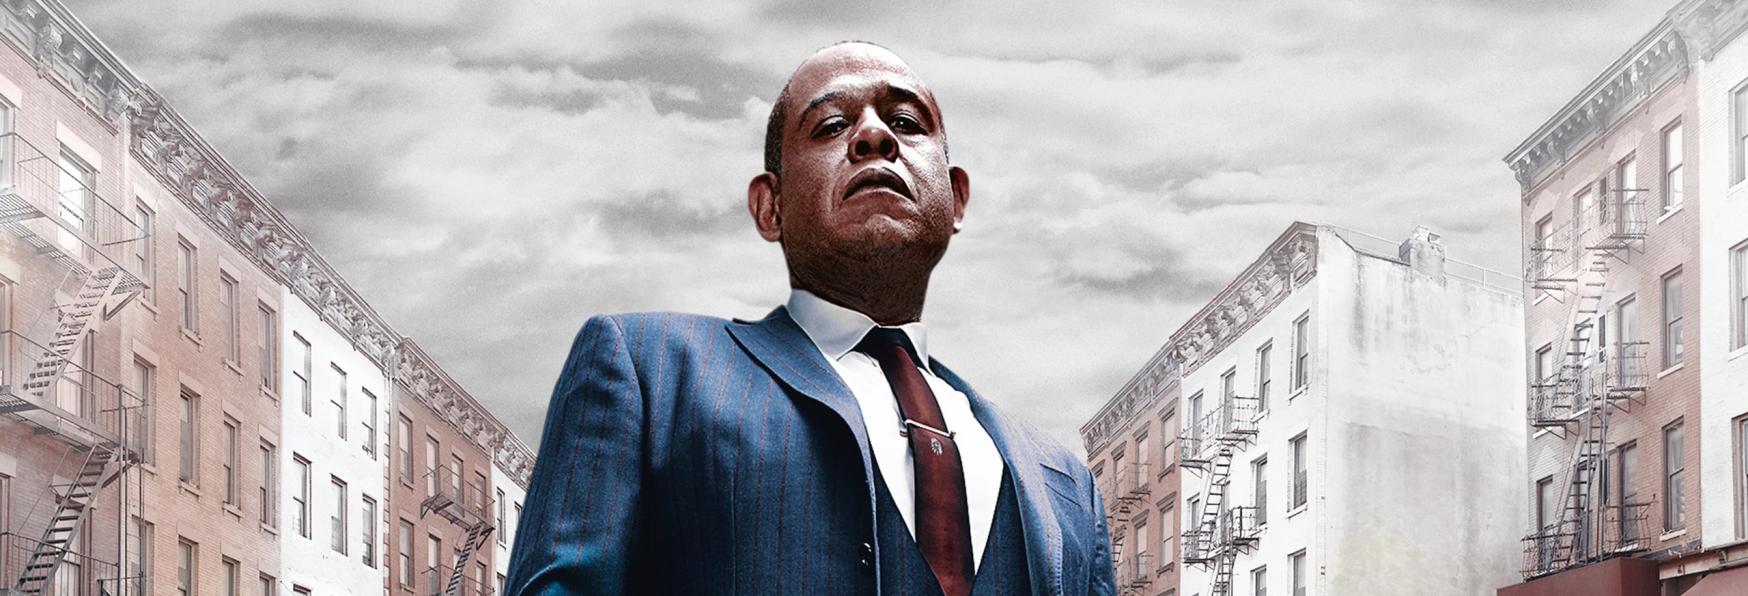 Godfather of Harlem 2: Trama, Cast, Trailer, Data di Uscita e altre Informazioni Note